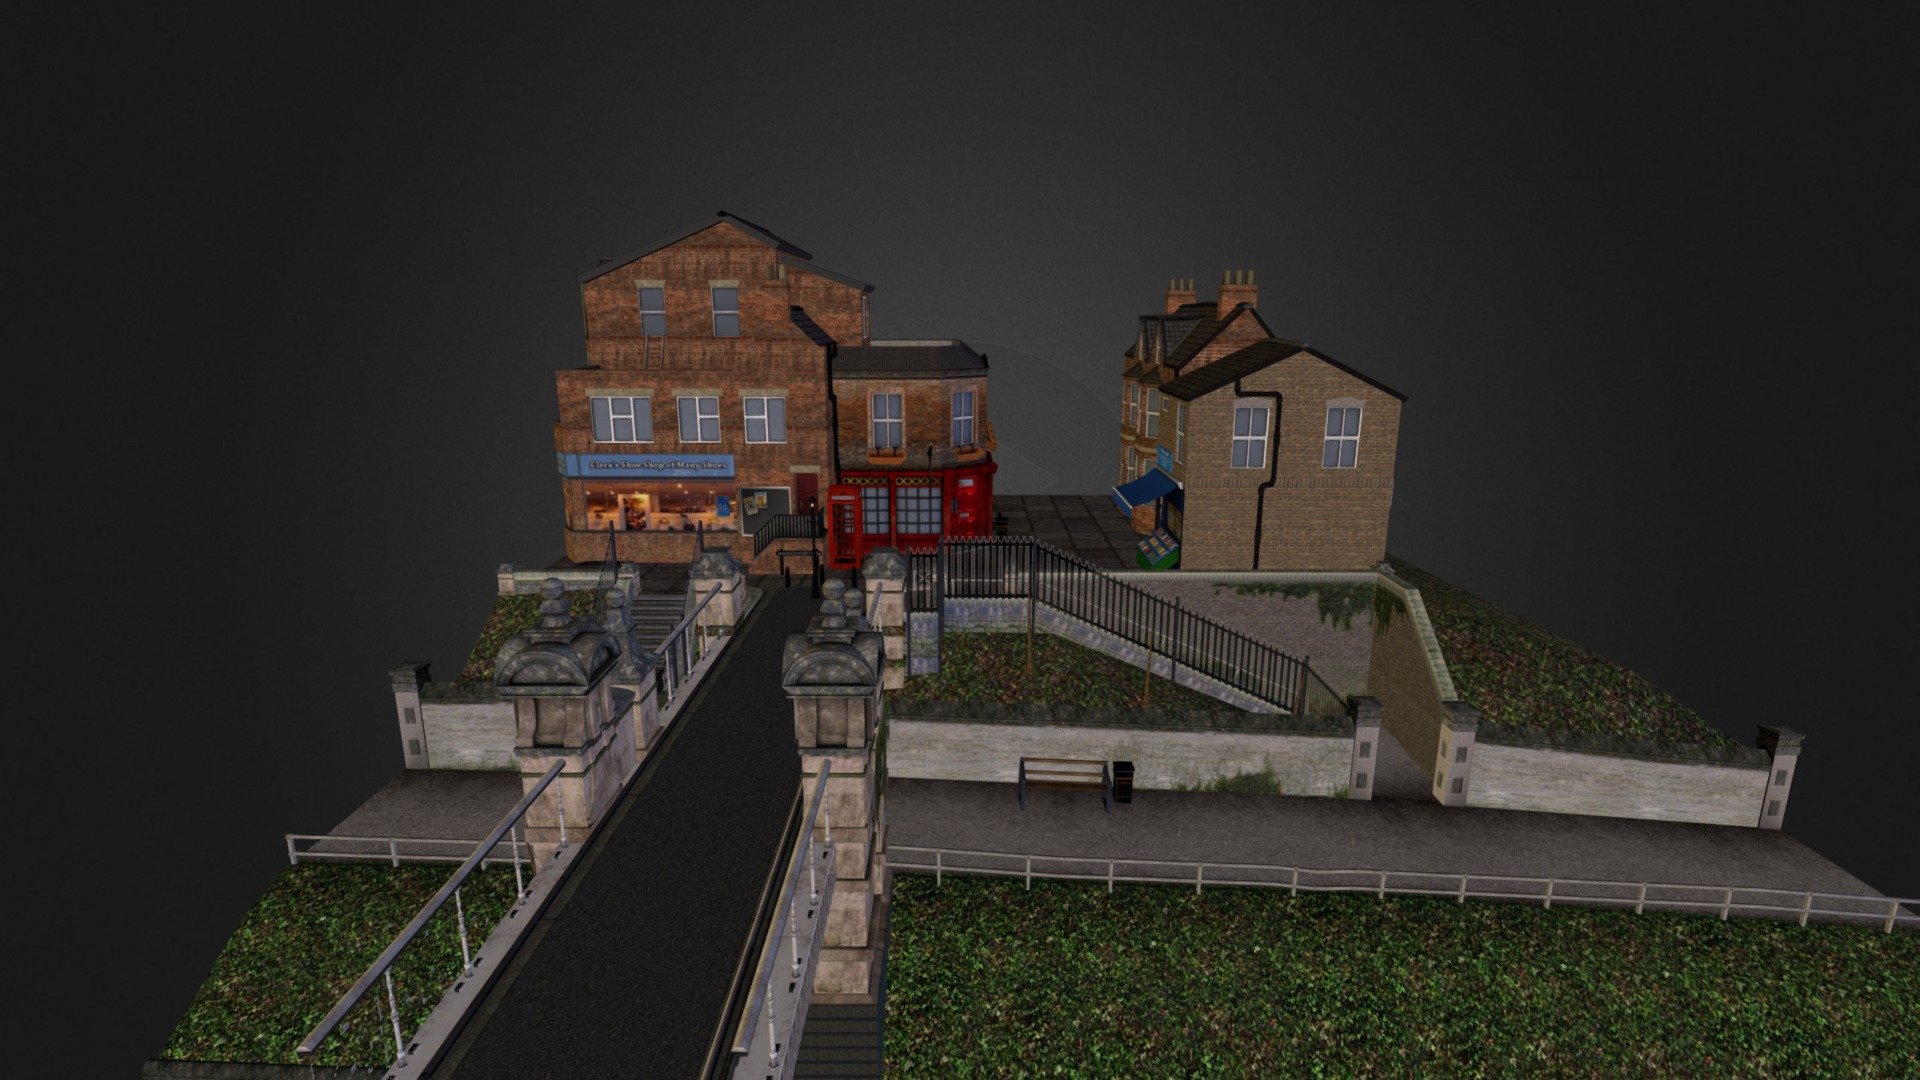 Cityscene based on the Headington Hill Brigde - CityScene London by Thomas van Fucht - 3D model by Thomas (@netherknight) 3d model